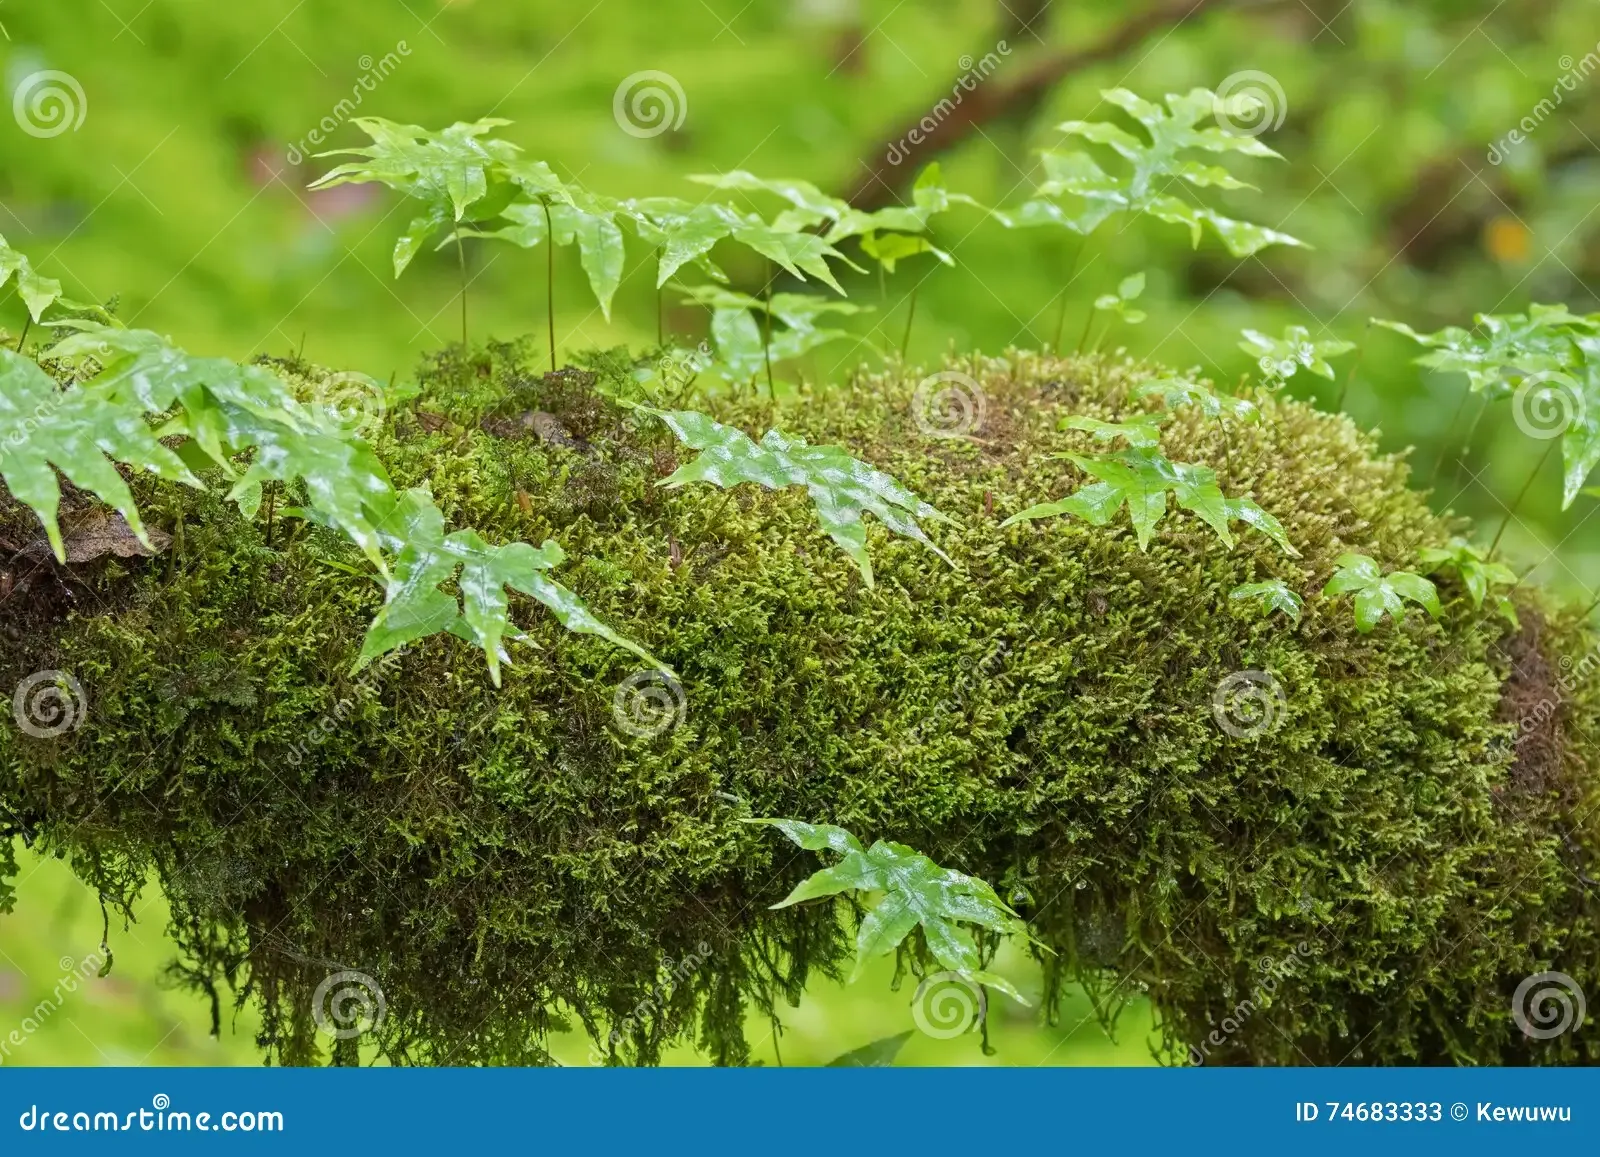 epiphytic-fern-fresh-green-peat-moss-sphagnum-moss-growing-forest-chiangmai-thailand-74683333.jpg